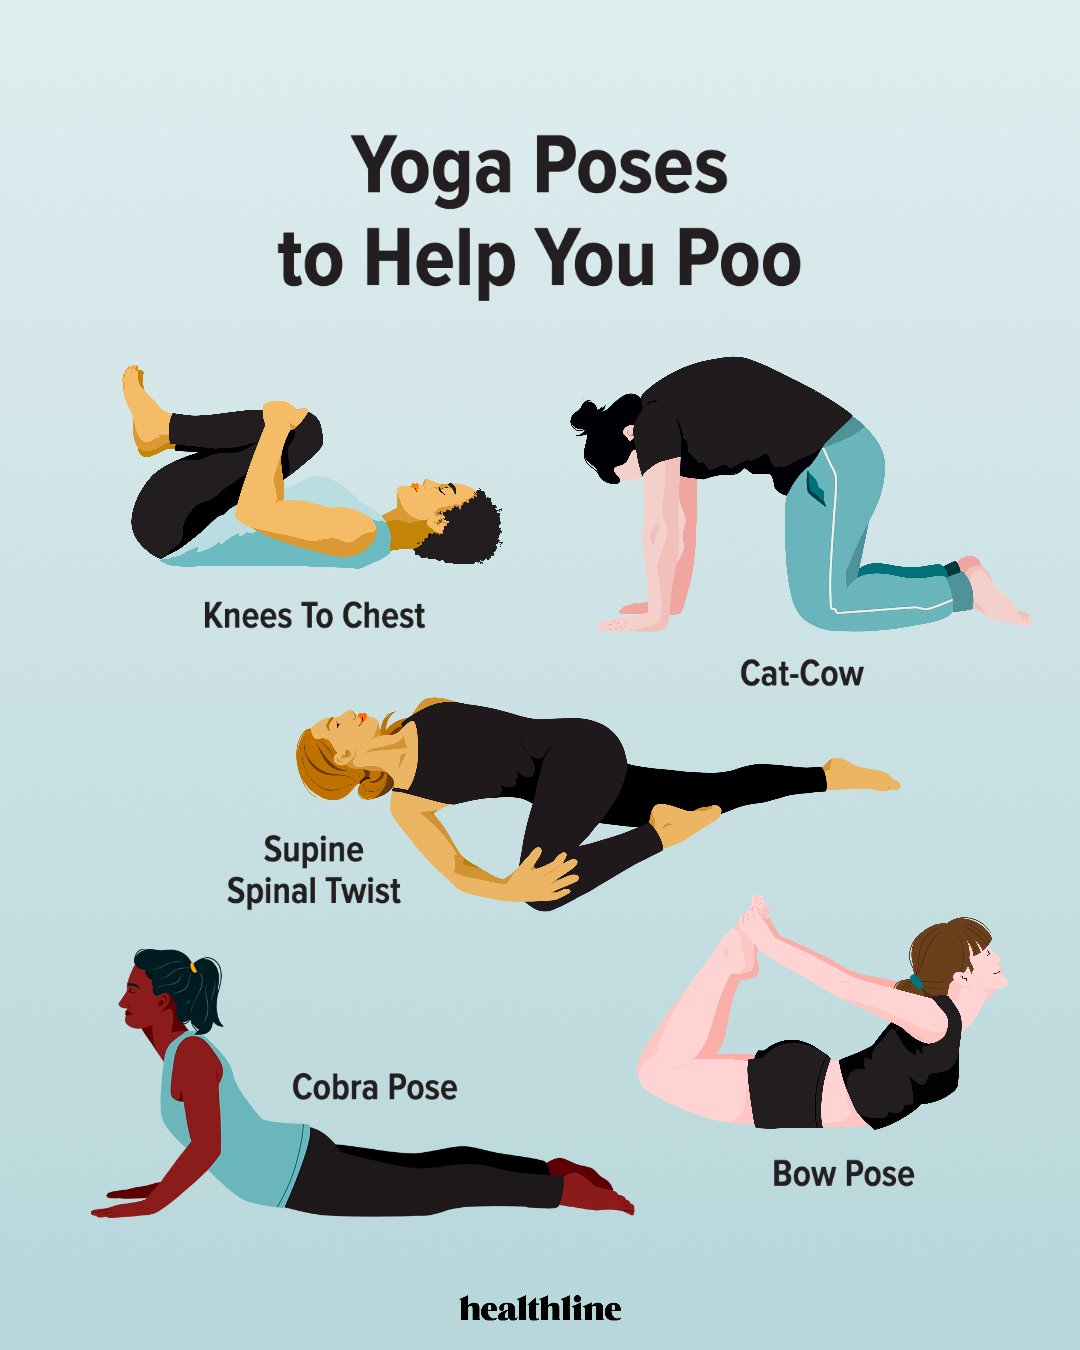 Healthline on X: When you gotta go, start a yoga flow! 💩 Did you